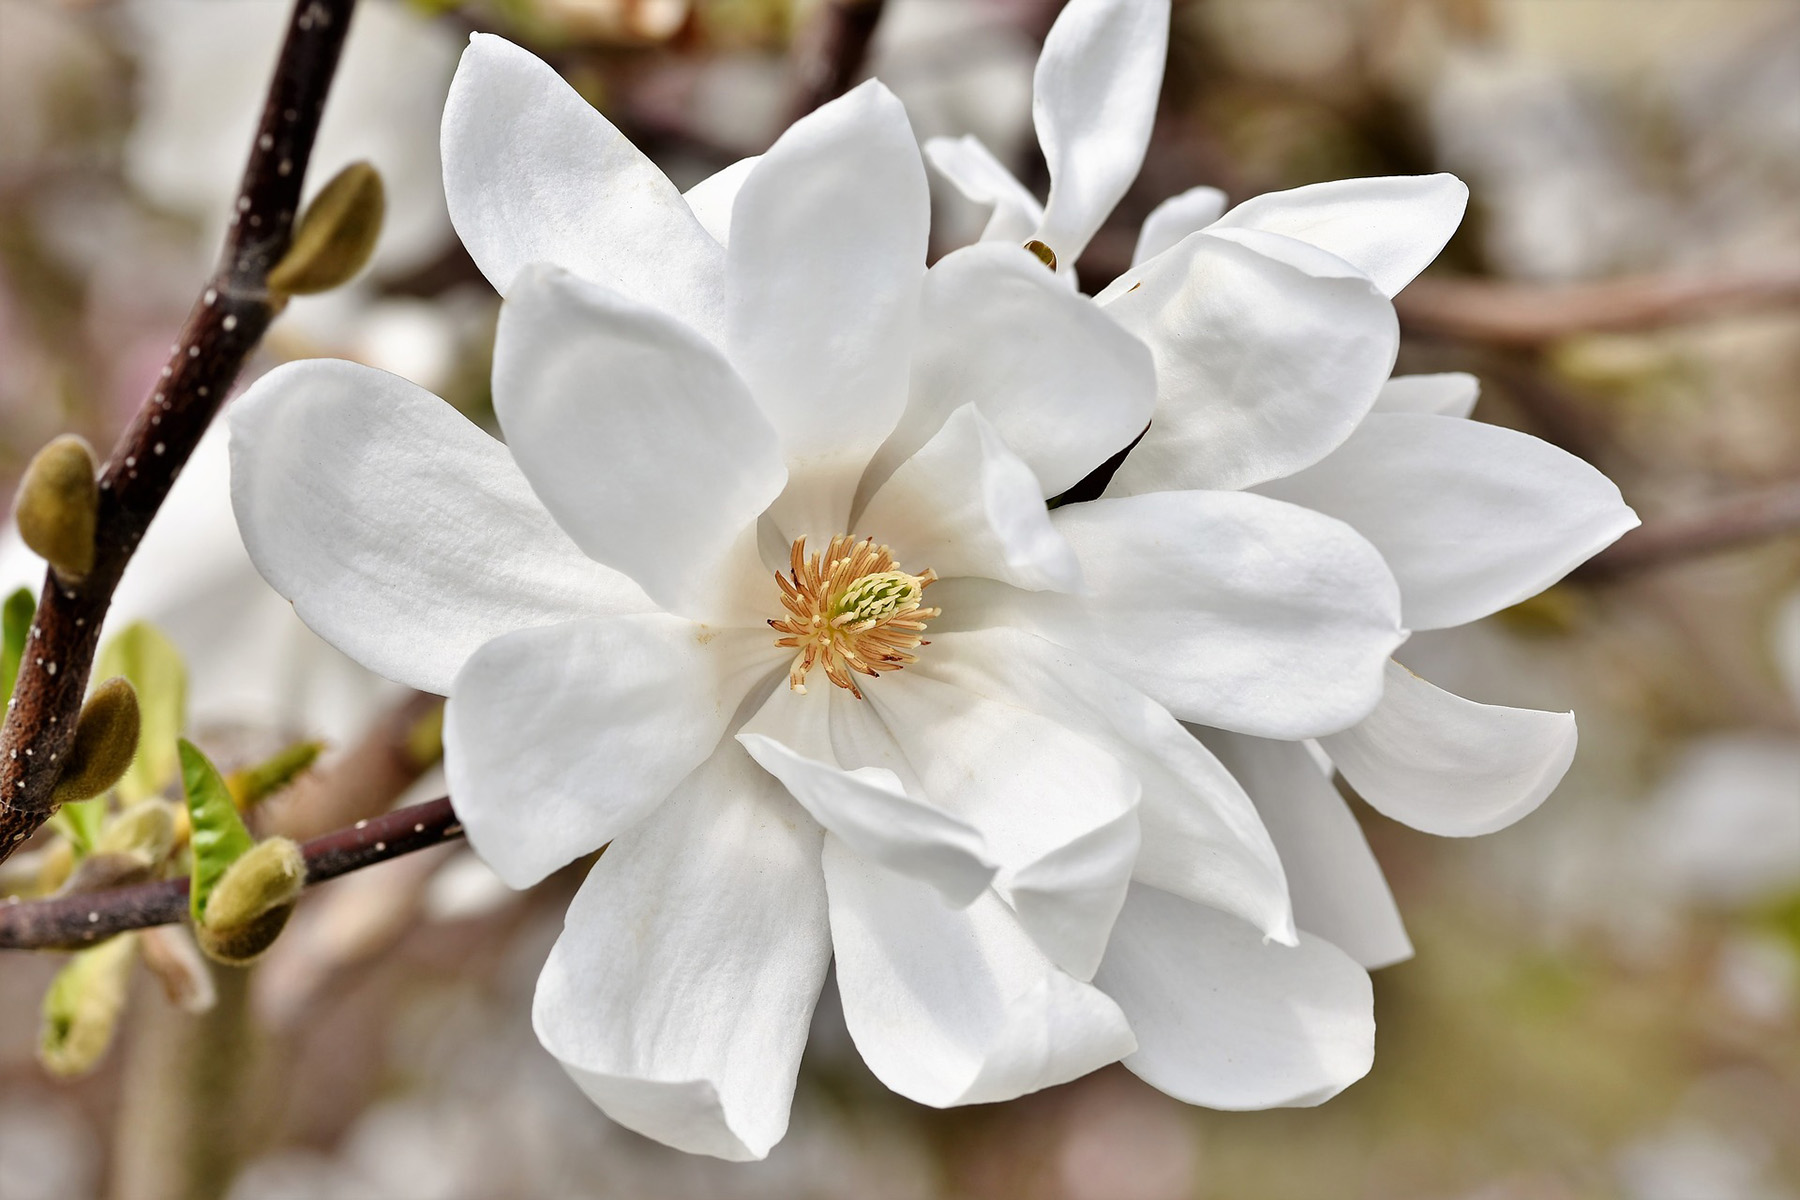 Picture of Magnolia flower